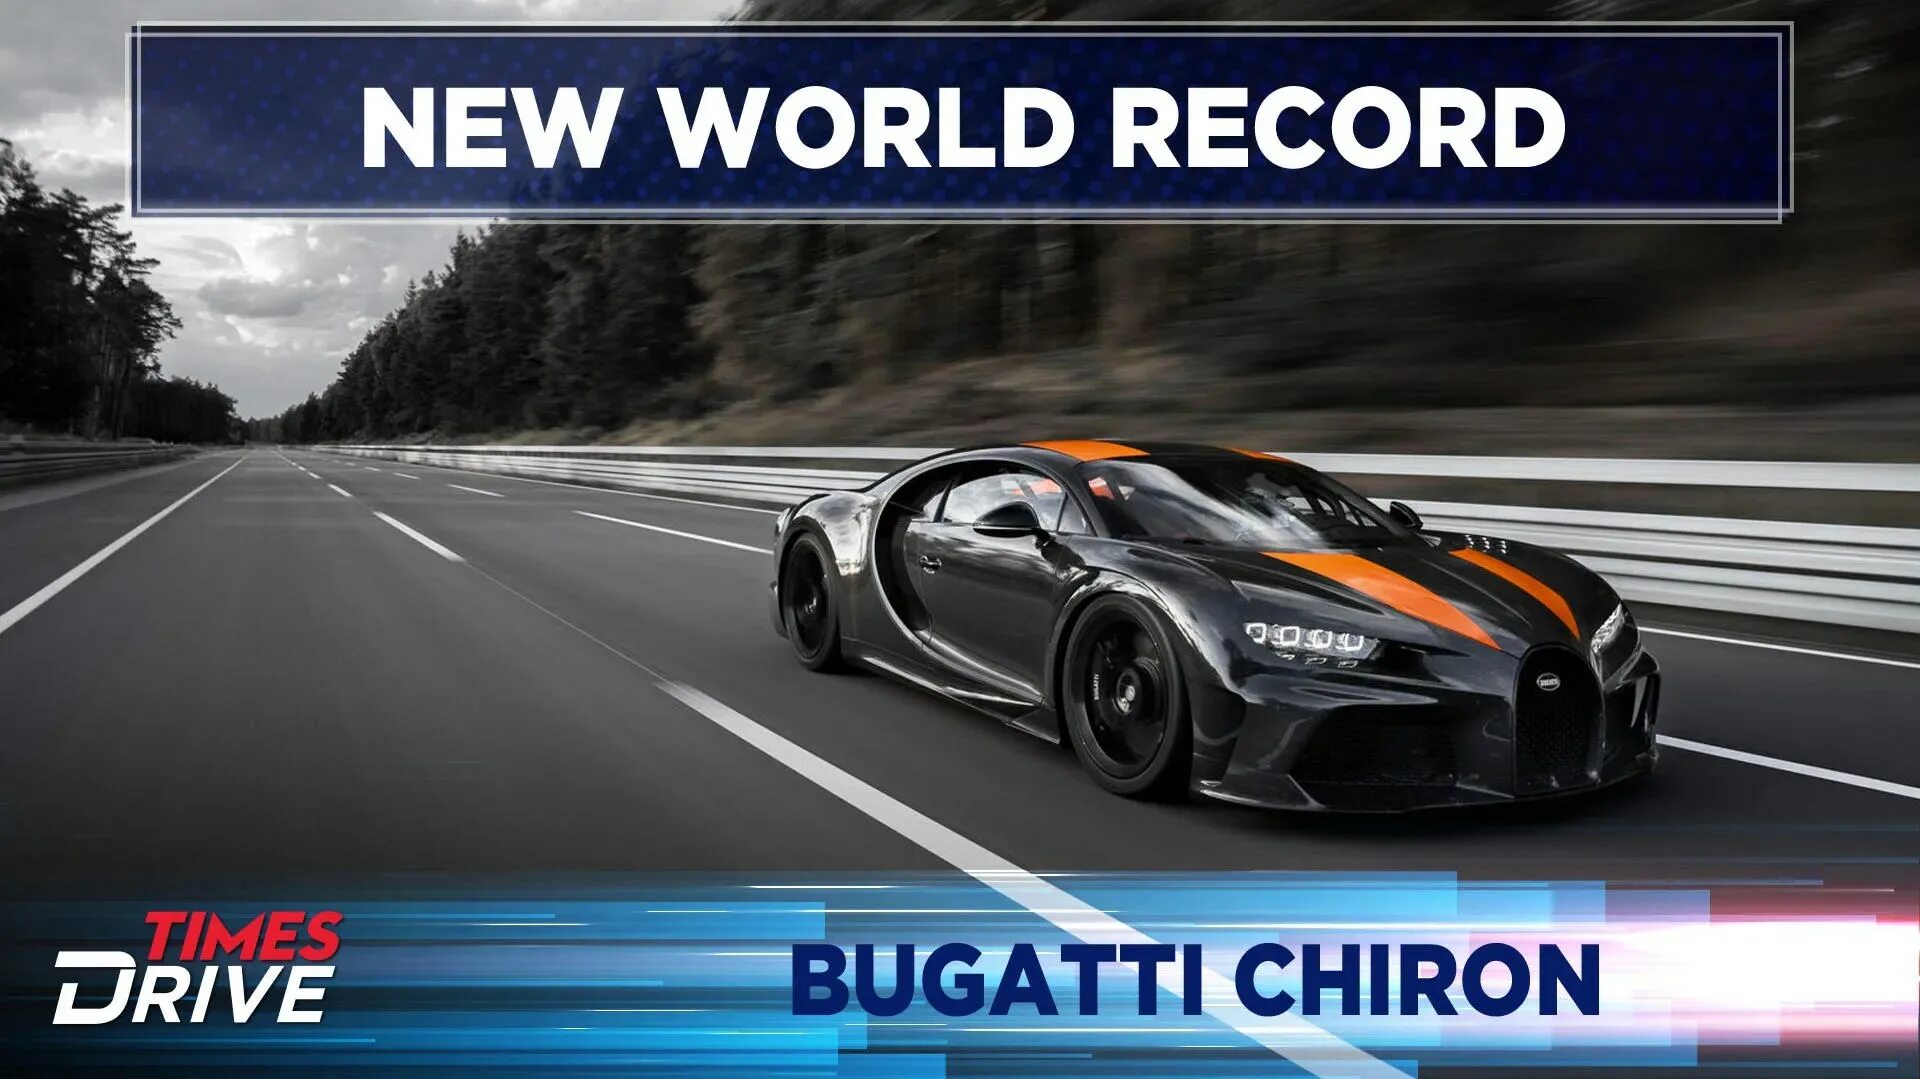 Bugatti chiron скорость. Скорость Бугатти. Широн 0-100. Бугатти рекорд скорости.